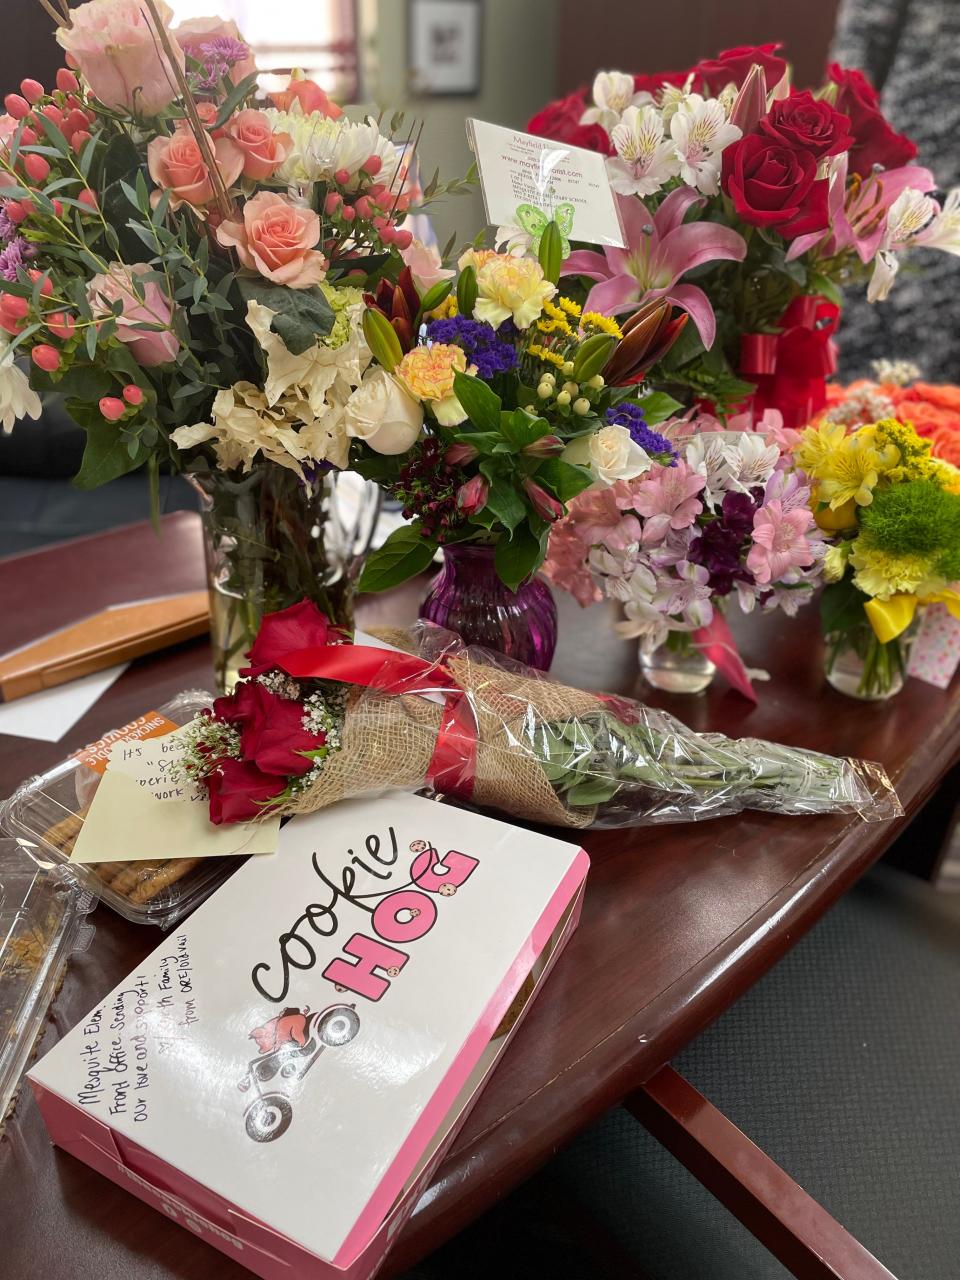 Flowers gifted to Mesquite Elementary School Principal Diane Vargo.